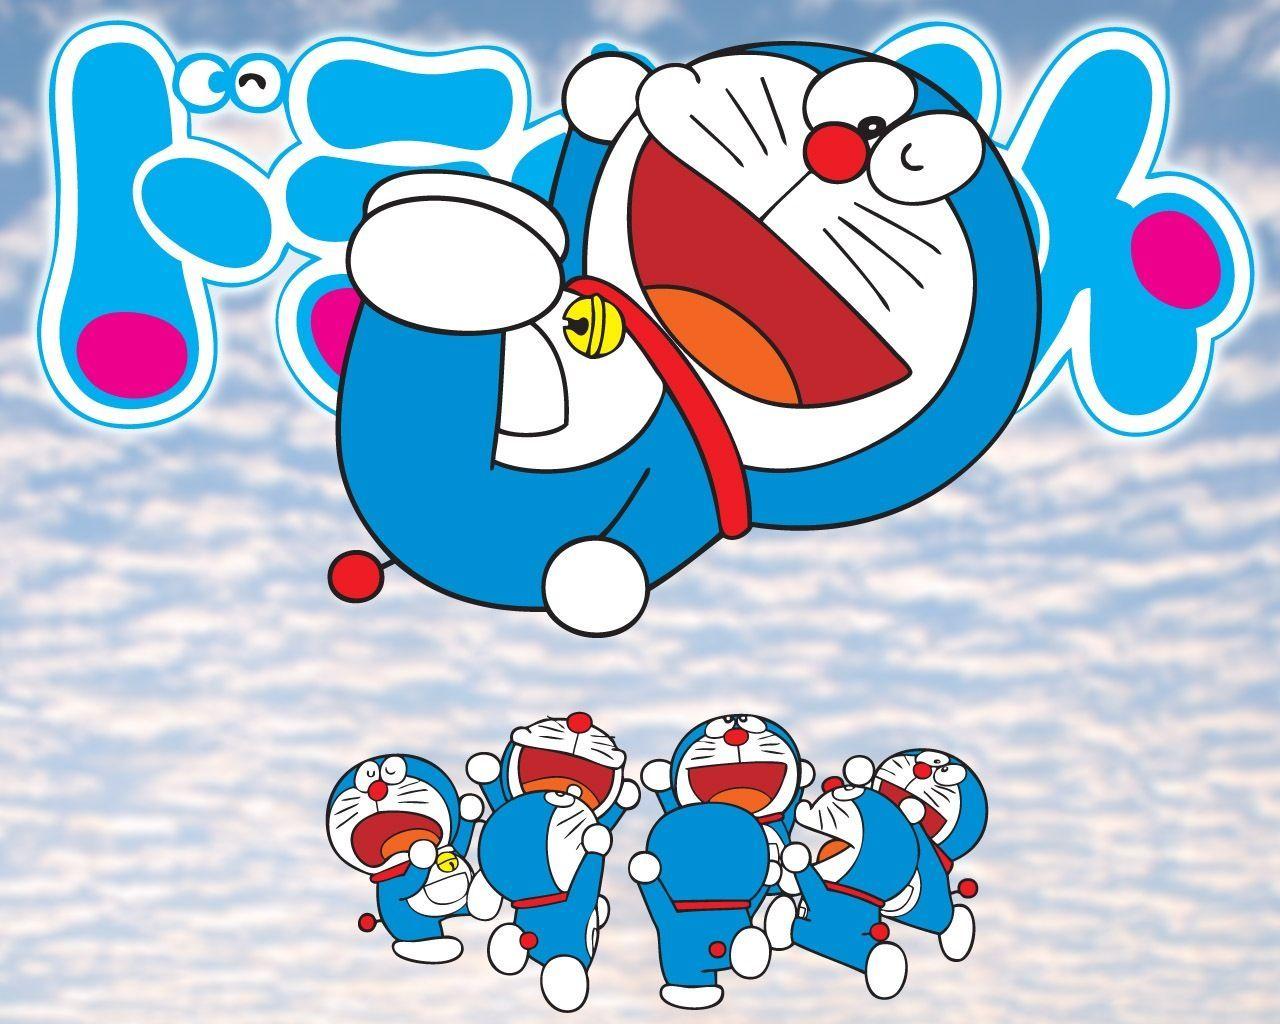 Doraemon Wallpaper Download Free. Cartoons Image. kavii in 2019